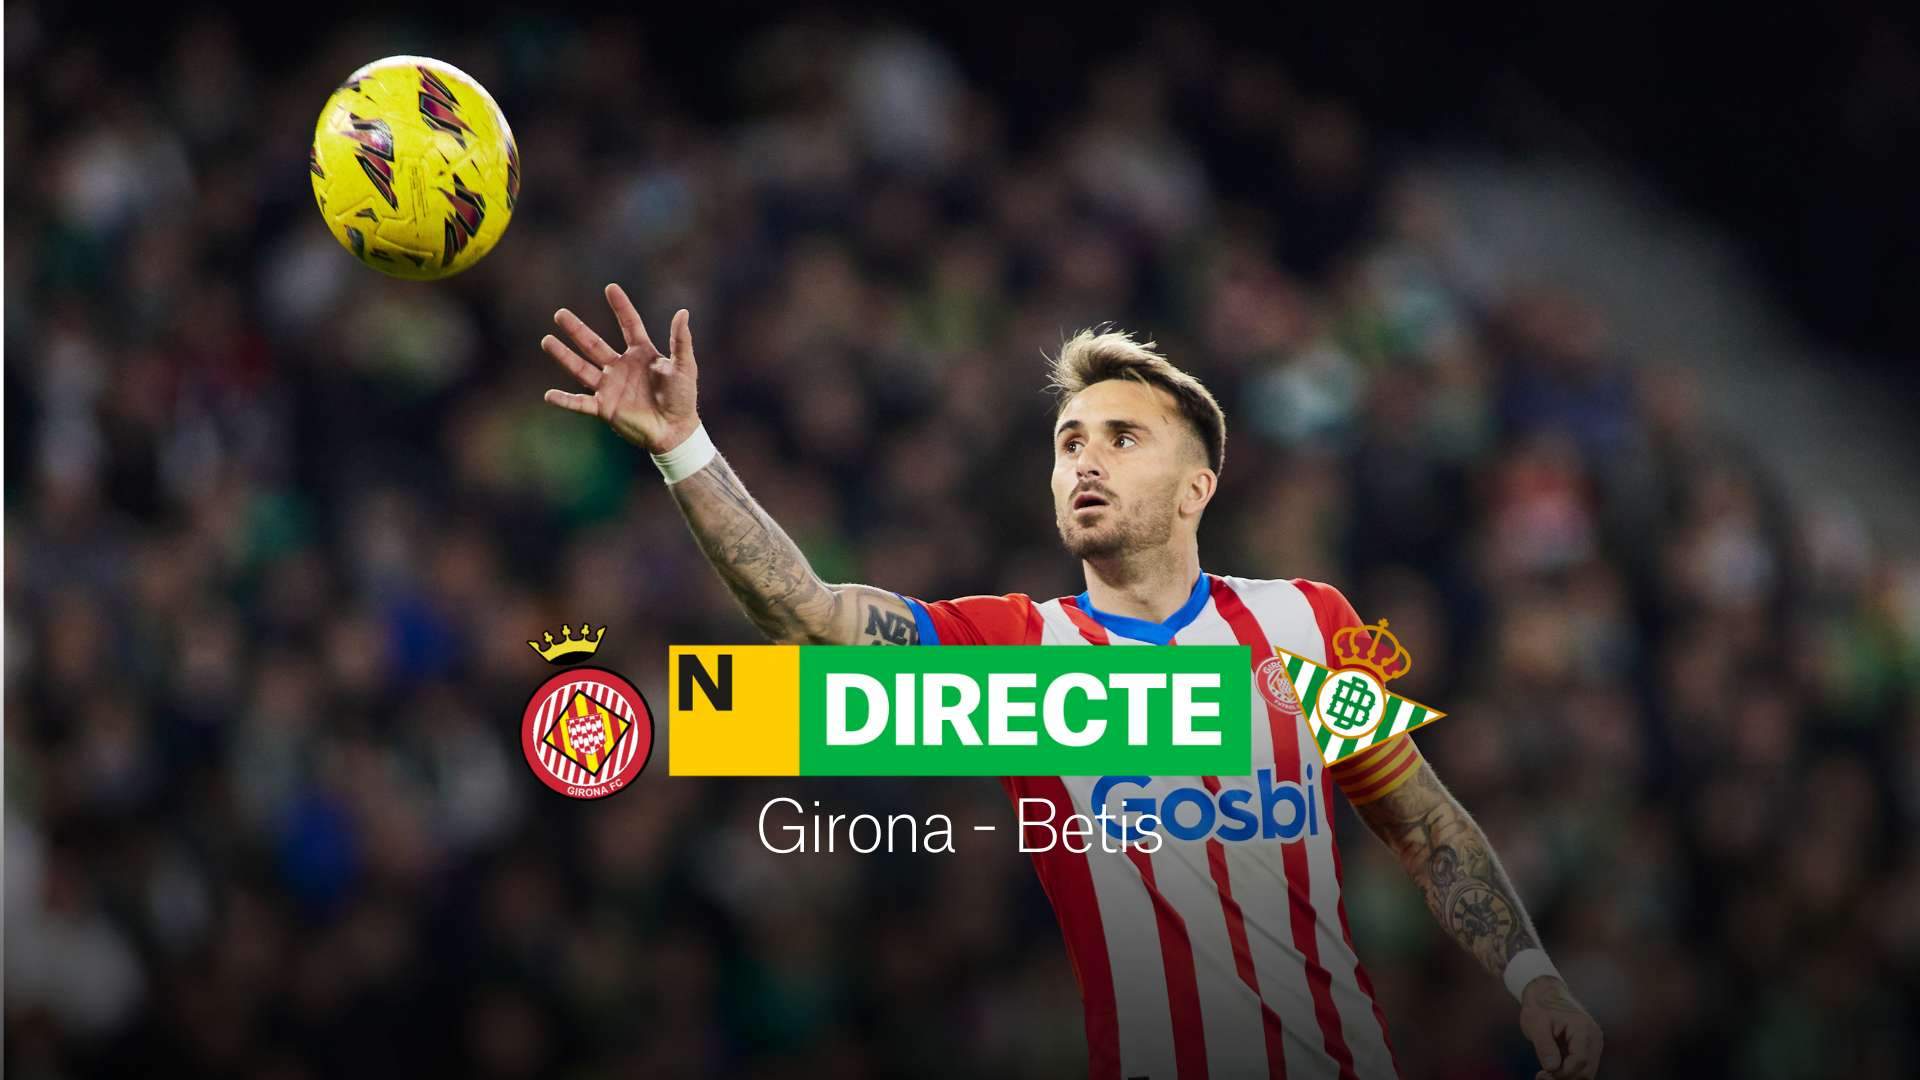 Girona-Betis de LaLiga EA Sports, DIRECTE | Resultat, resum i gols